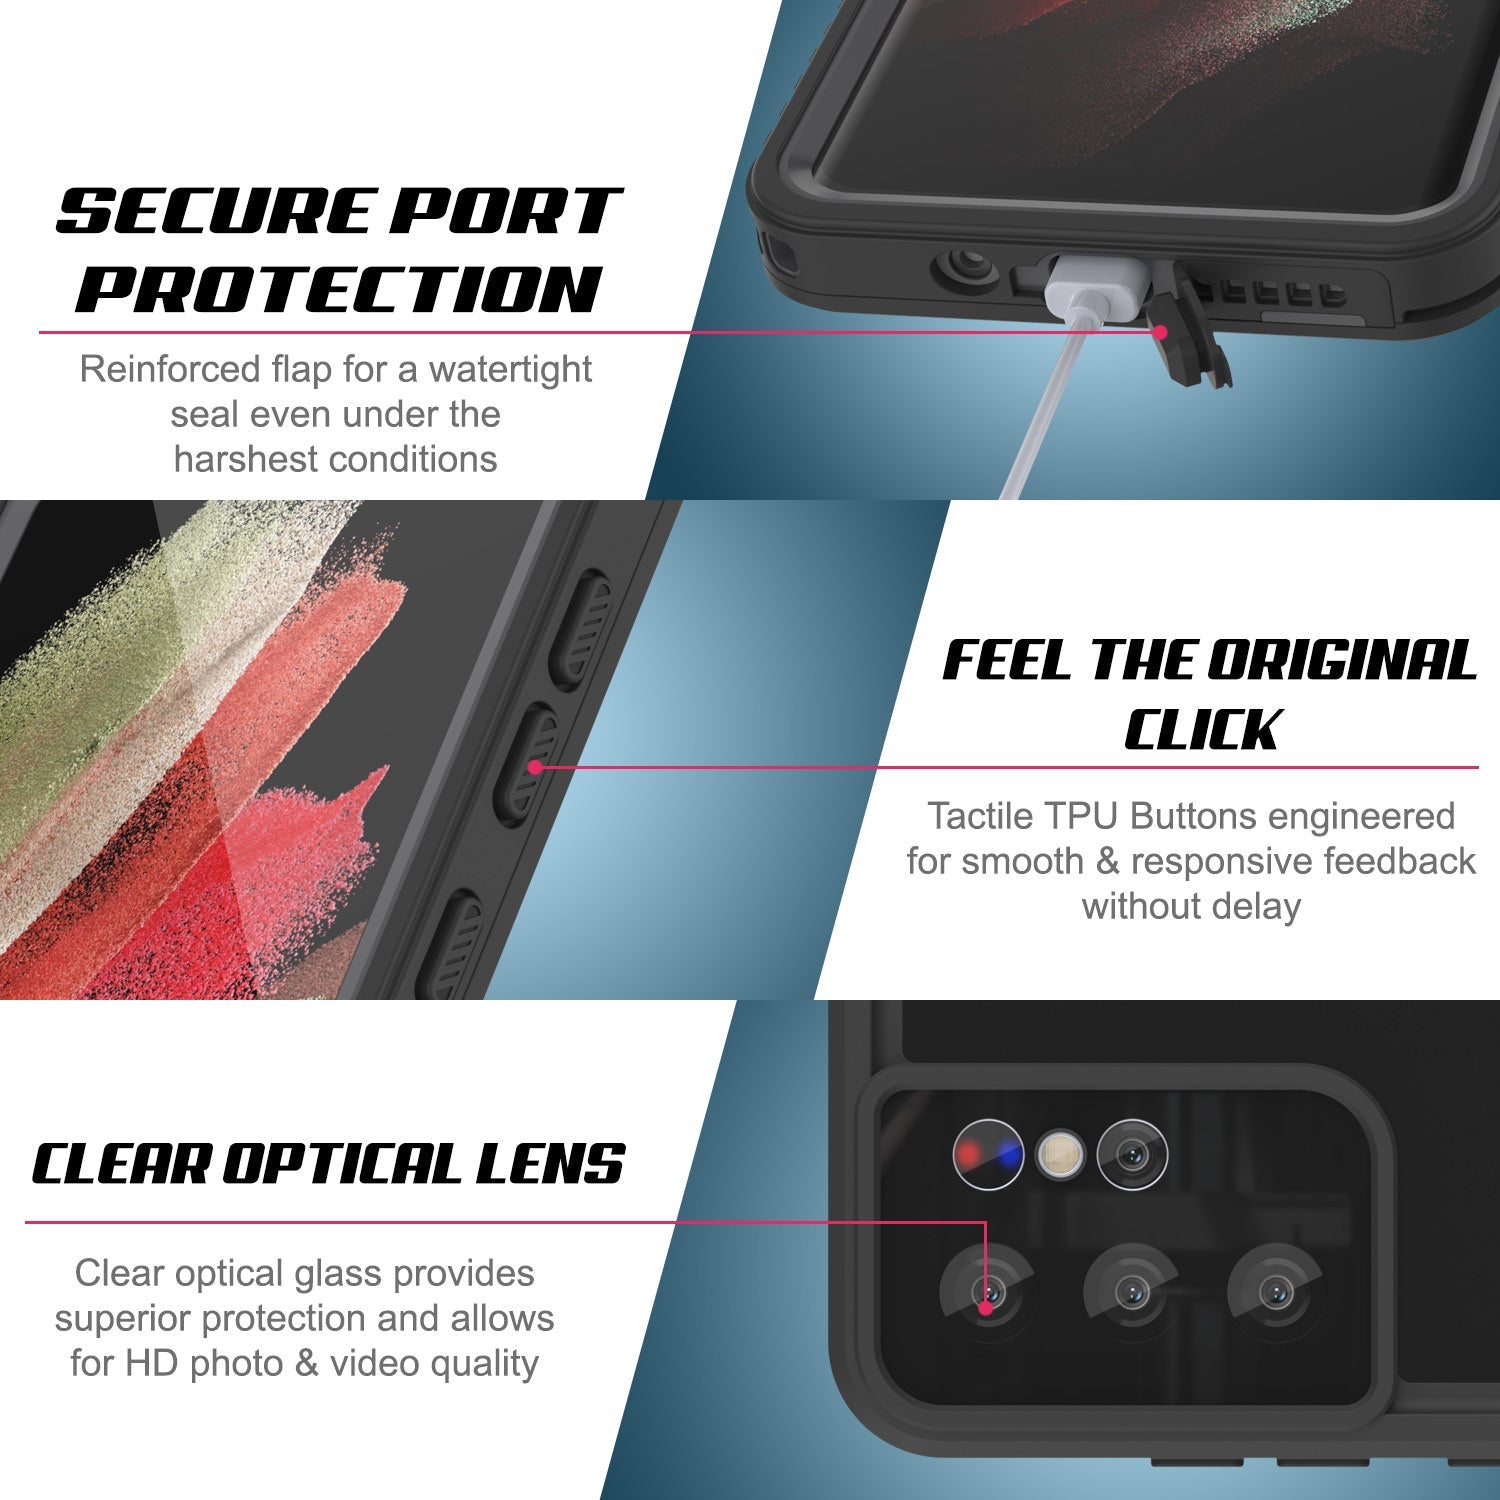 Galaxy S22 Ultra Waterproof Case PunkCase StudStar Black Thin 6.6ft Underwater IP68 Shock/Snow Proof